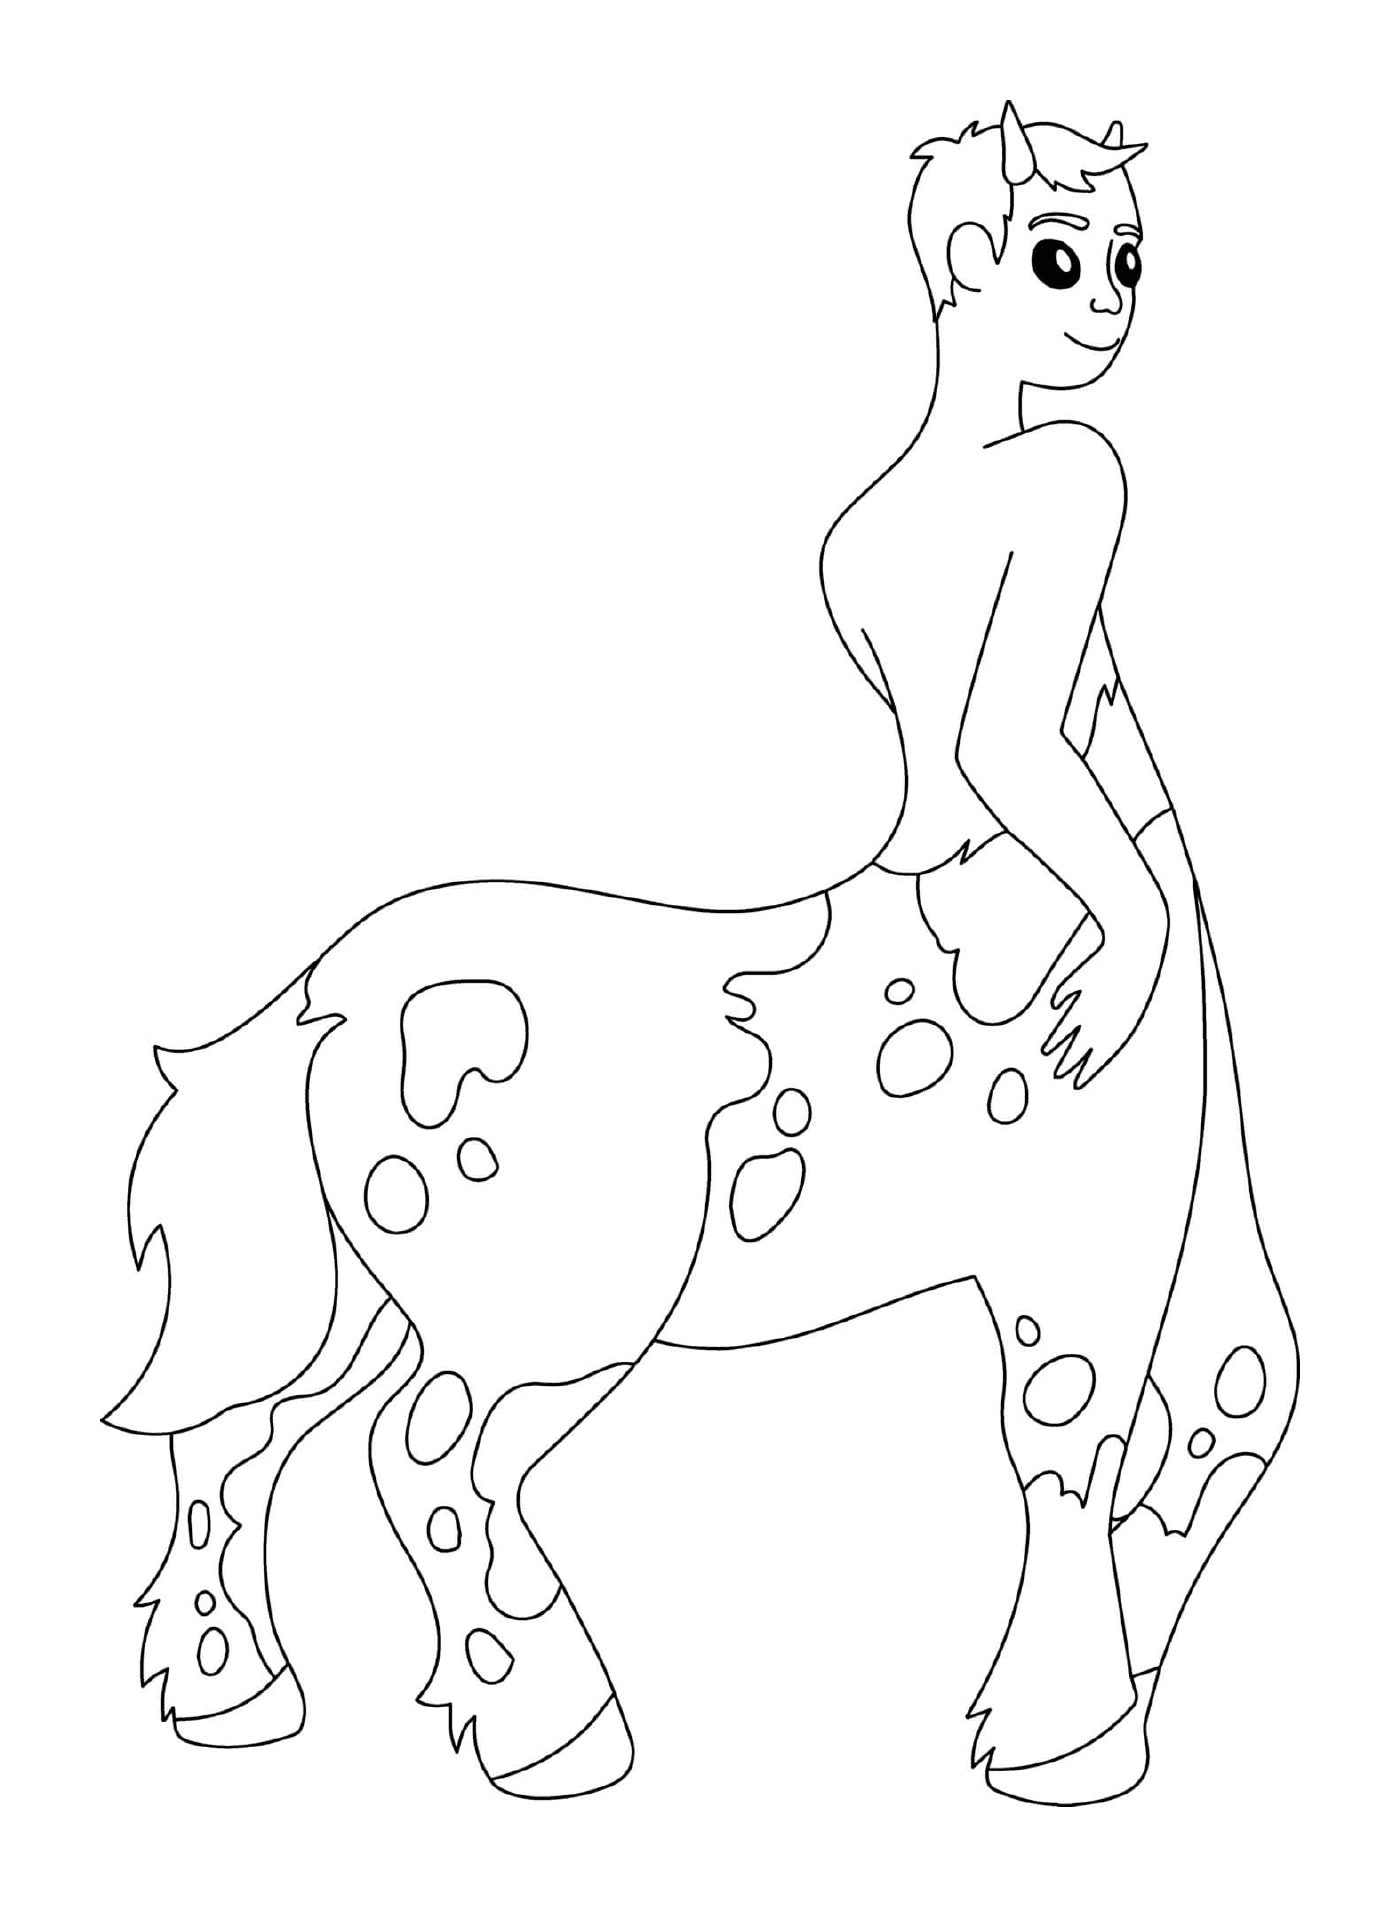   Centaure mi-homme mi-cheval mythologie grecque 